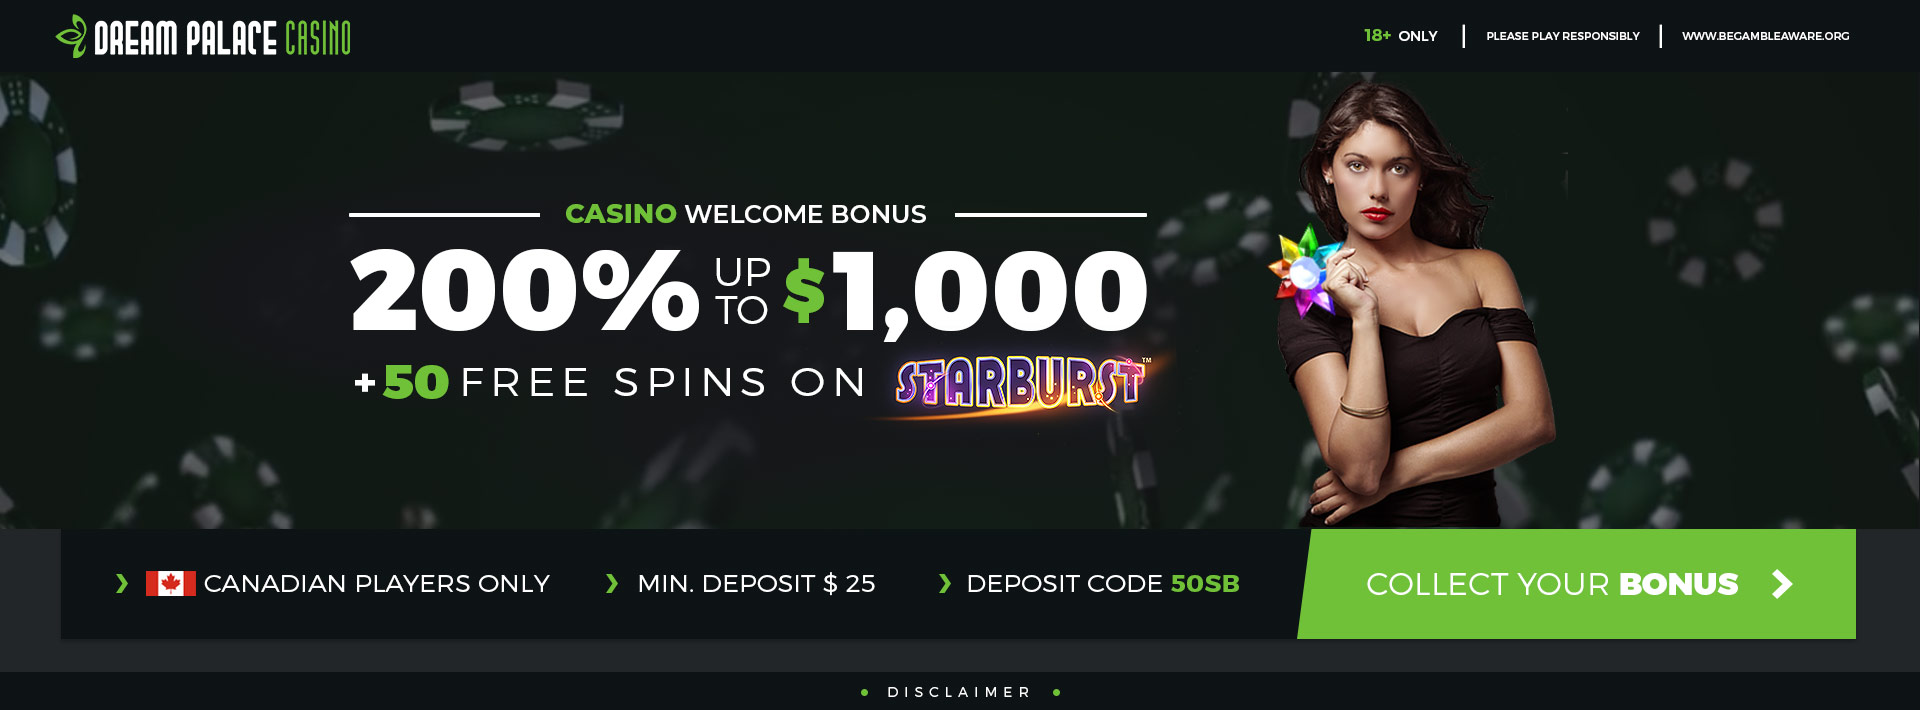 $1000 Bonus + 50 Free Spins | Dream Palace Casino